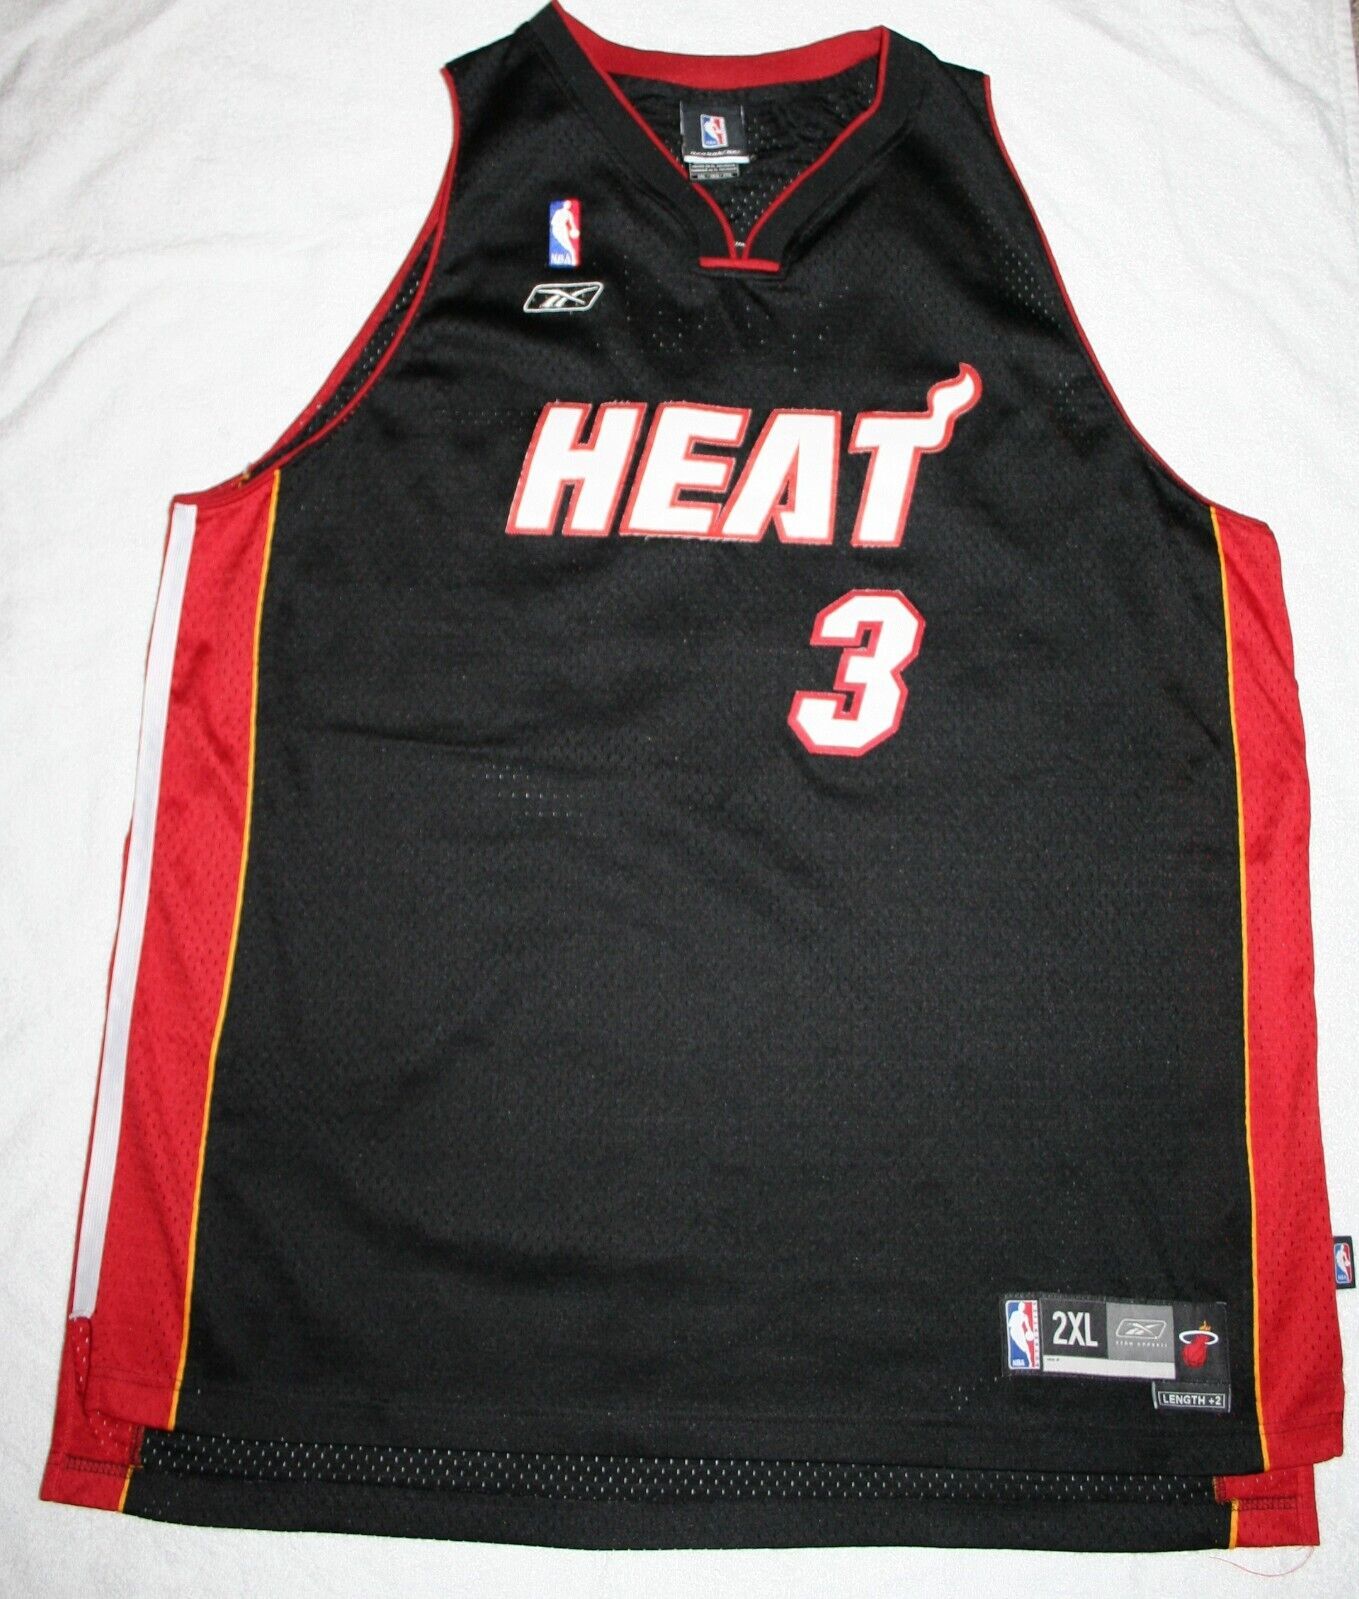 Primary image for Dwayne Wade Miami Heat NBA Basketball Reebok Jersey Adult 2XL XXL